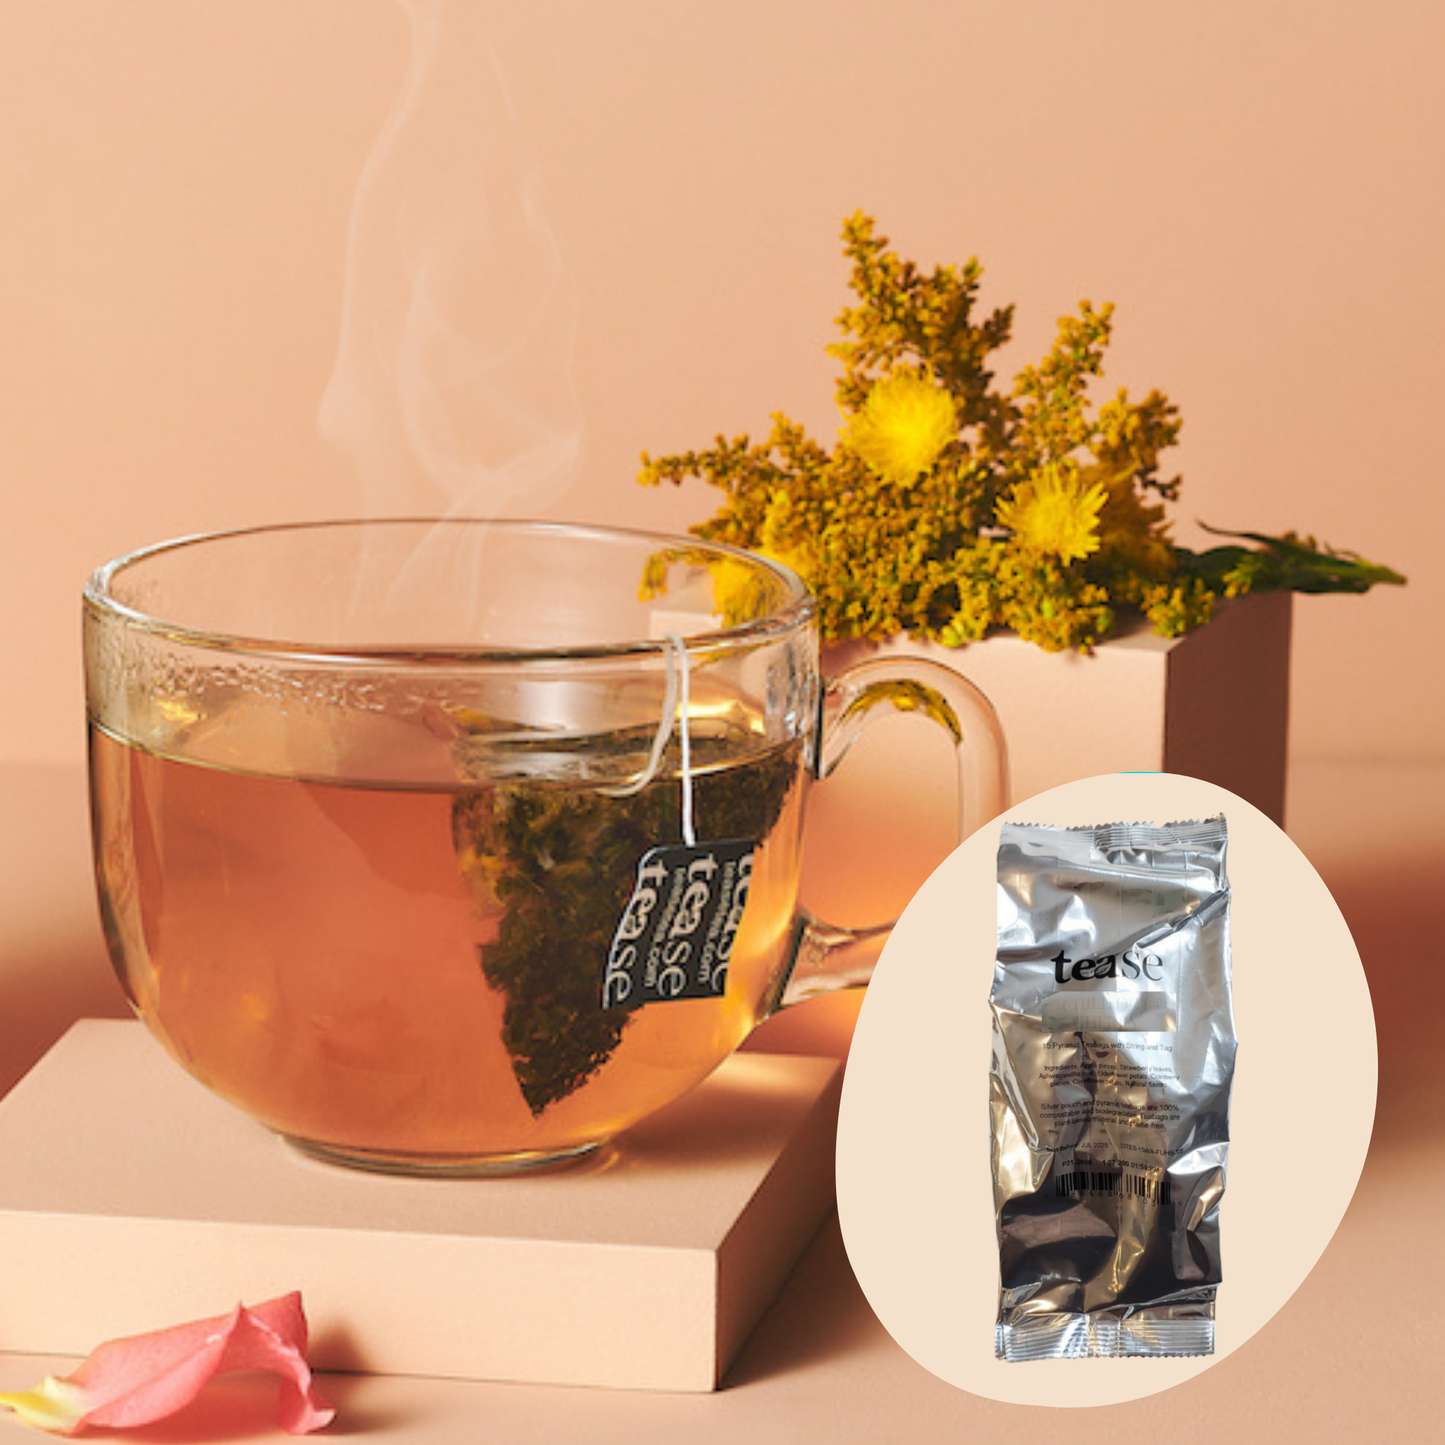 Tease - In The Flow Tea Refill | All Natural Organic Tea Blend